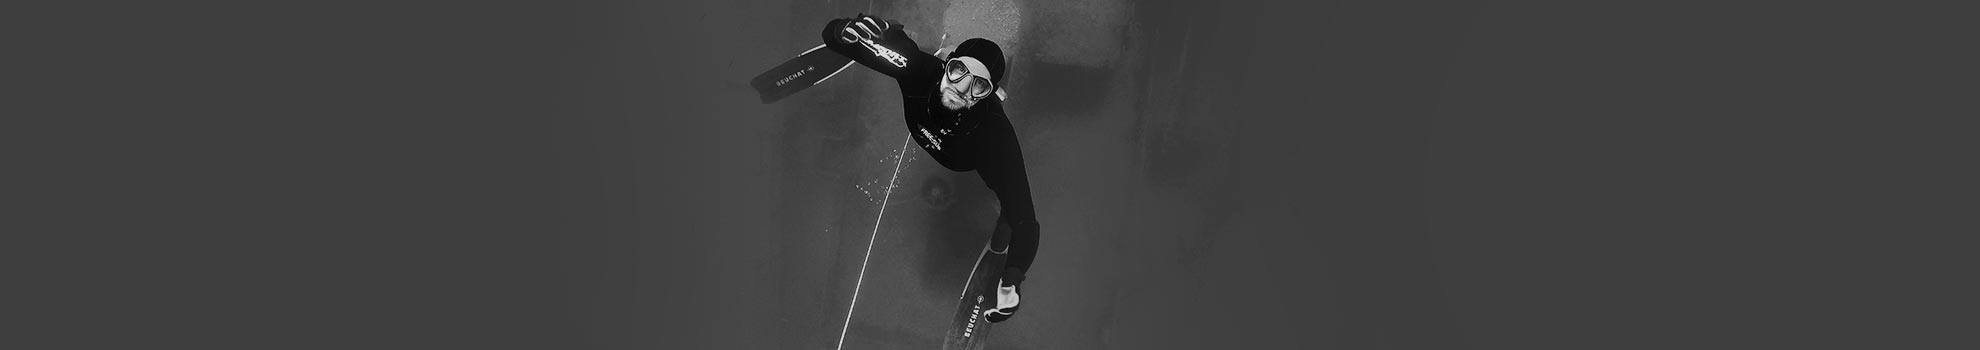 Freediver holding his breath while inside a shipwreck cabin